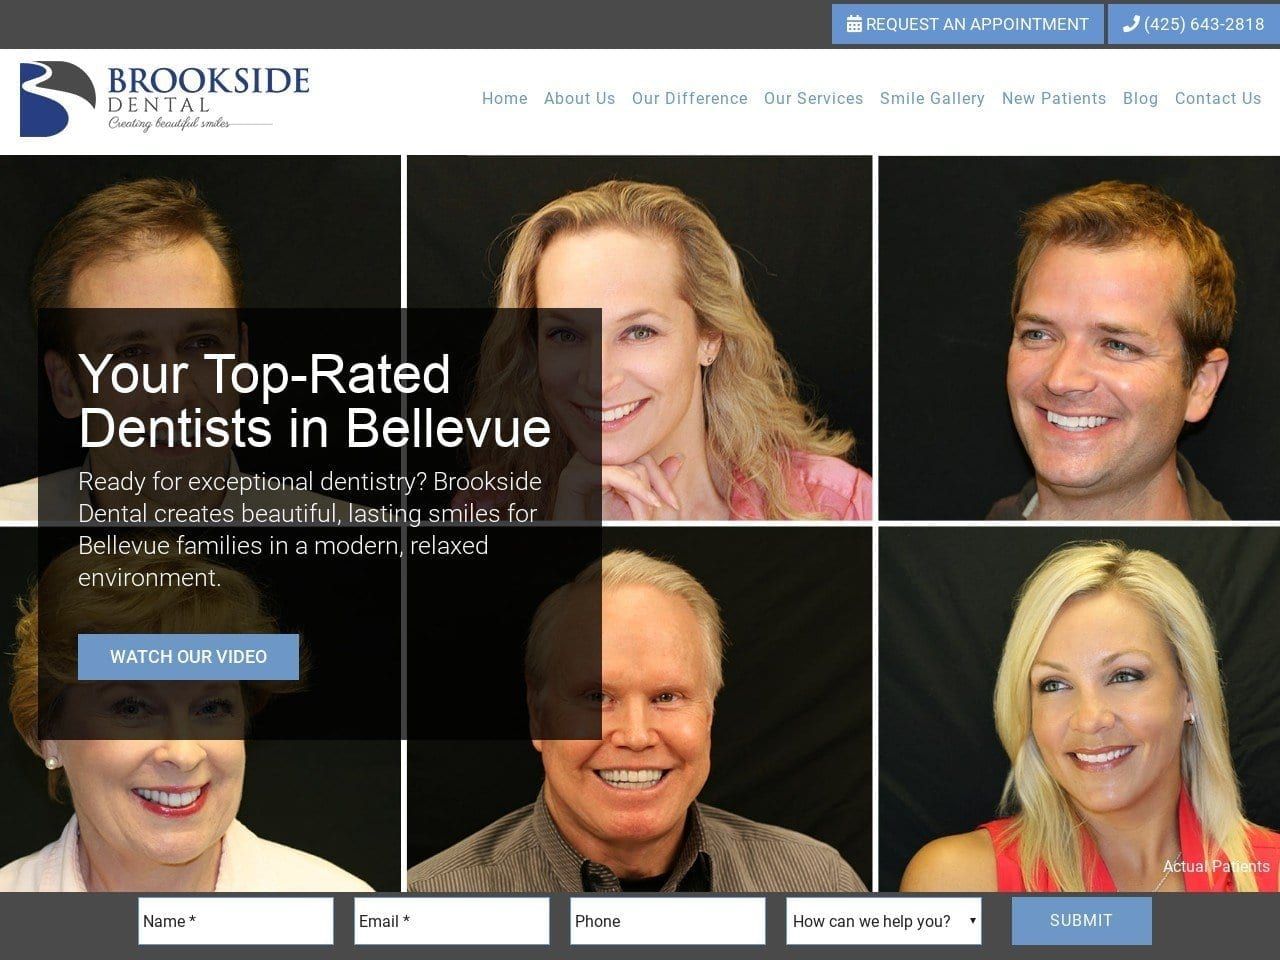 Brookside Dental Website Screenshot from brooksidedental.com